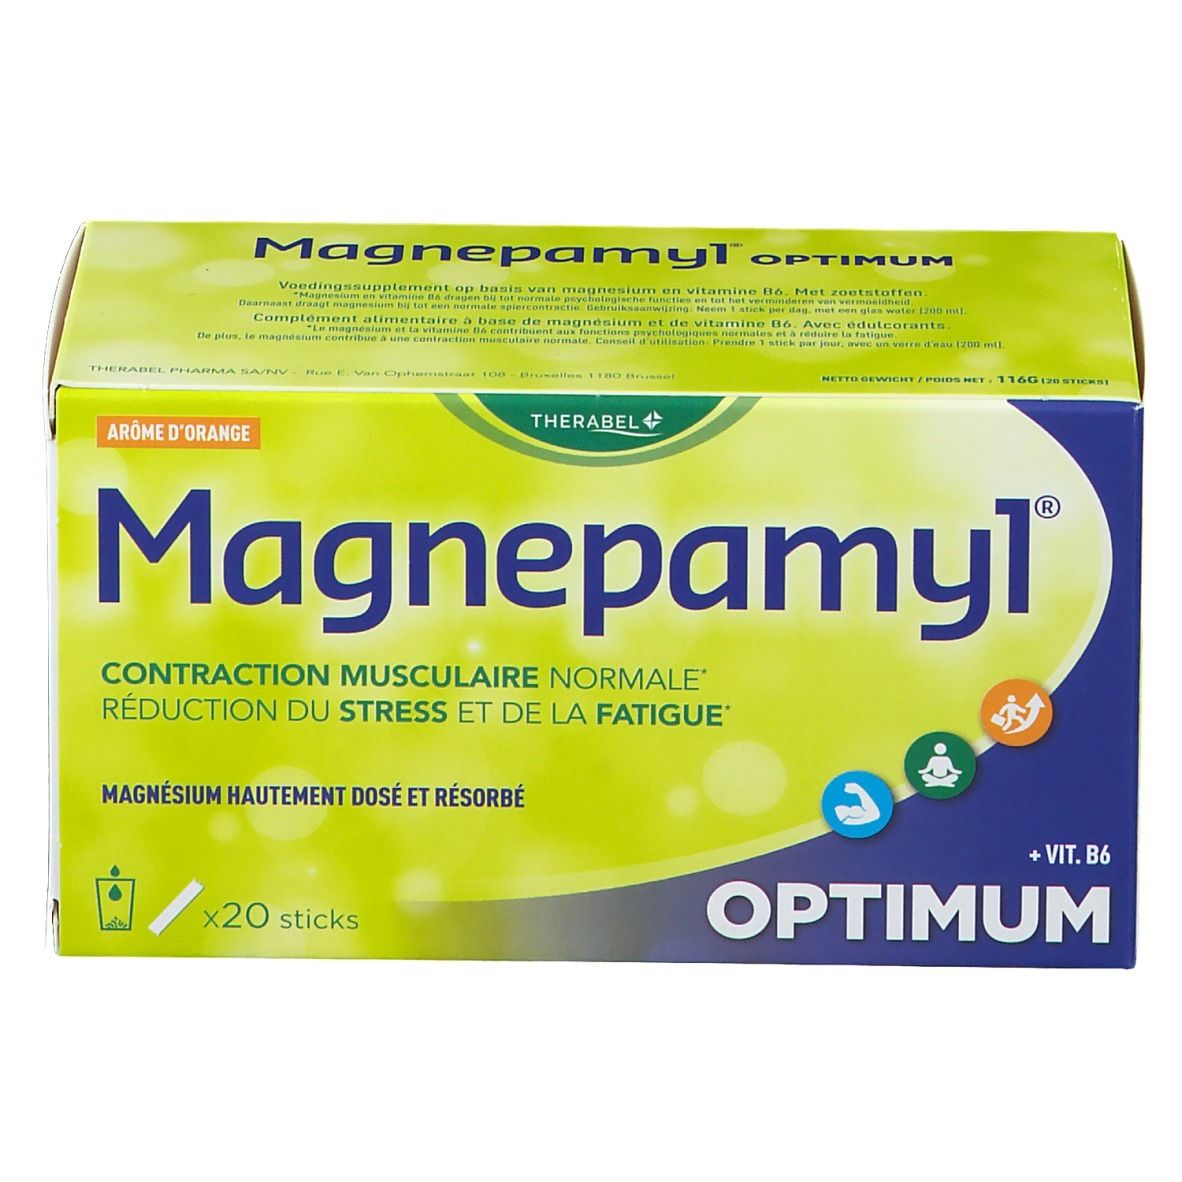 Magnepamyl® Optimum